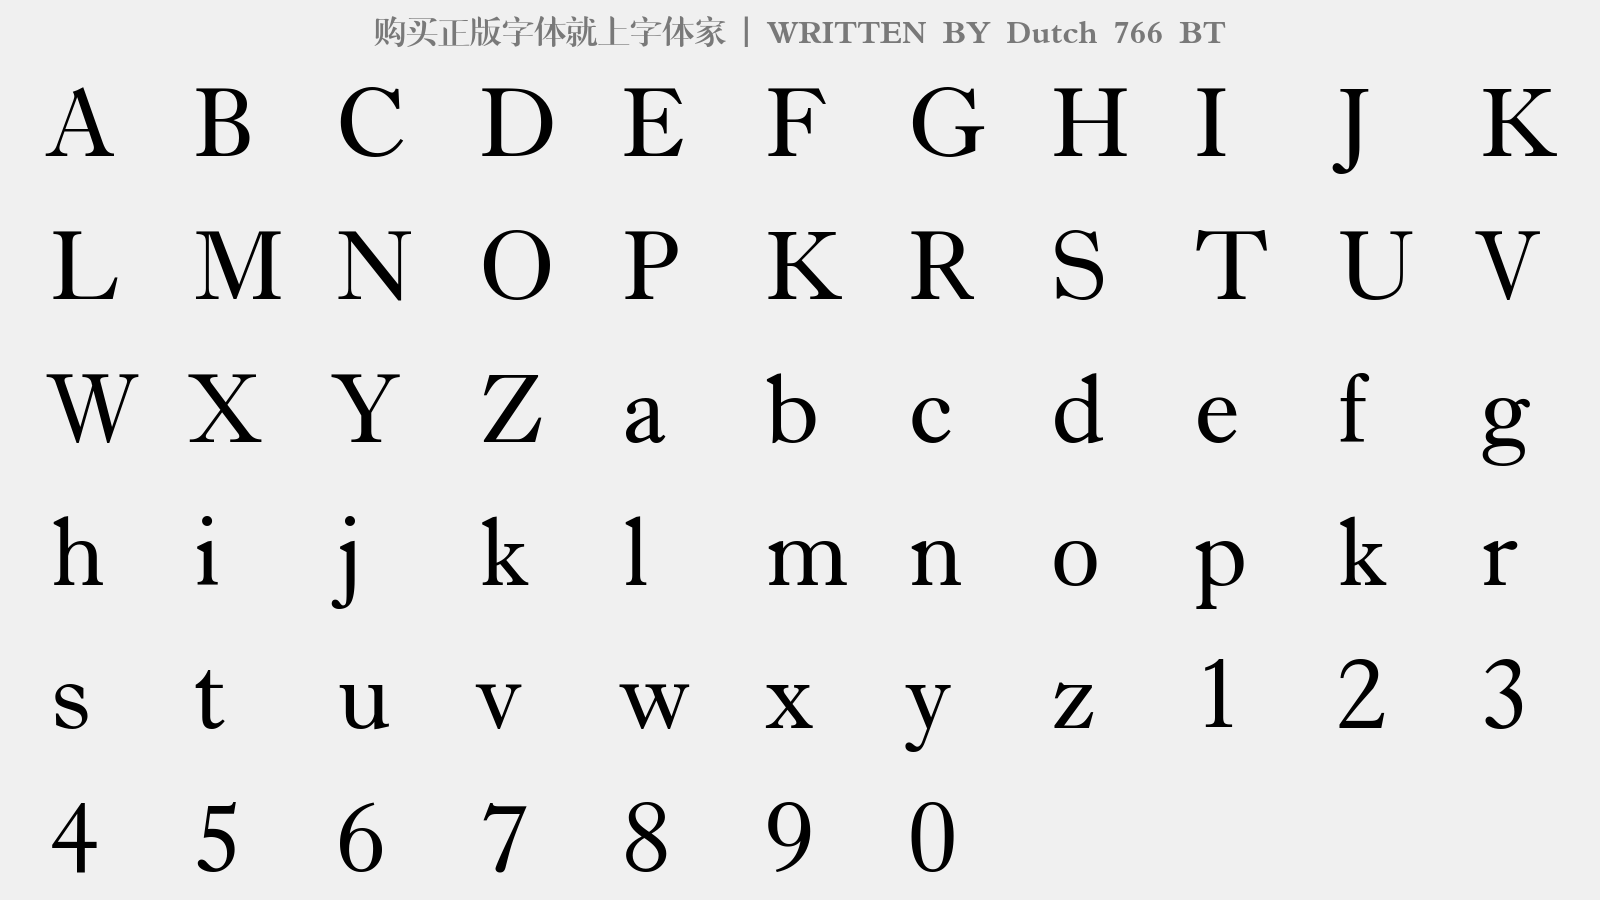 Dutch 766 BT - 大写字母/小写字母/数字